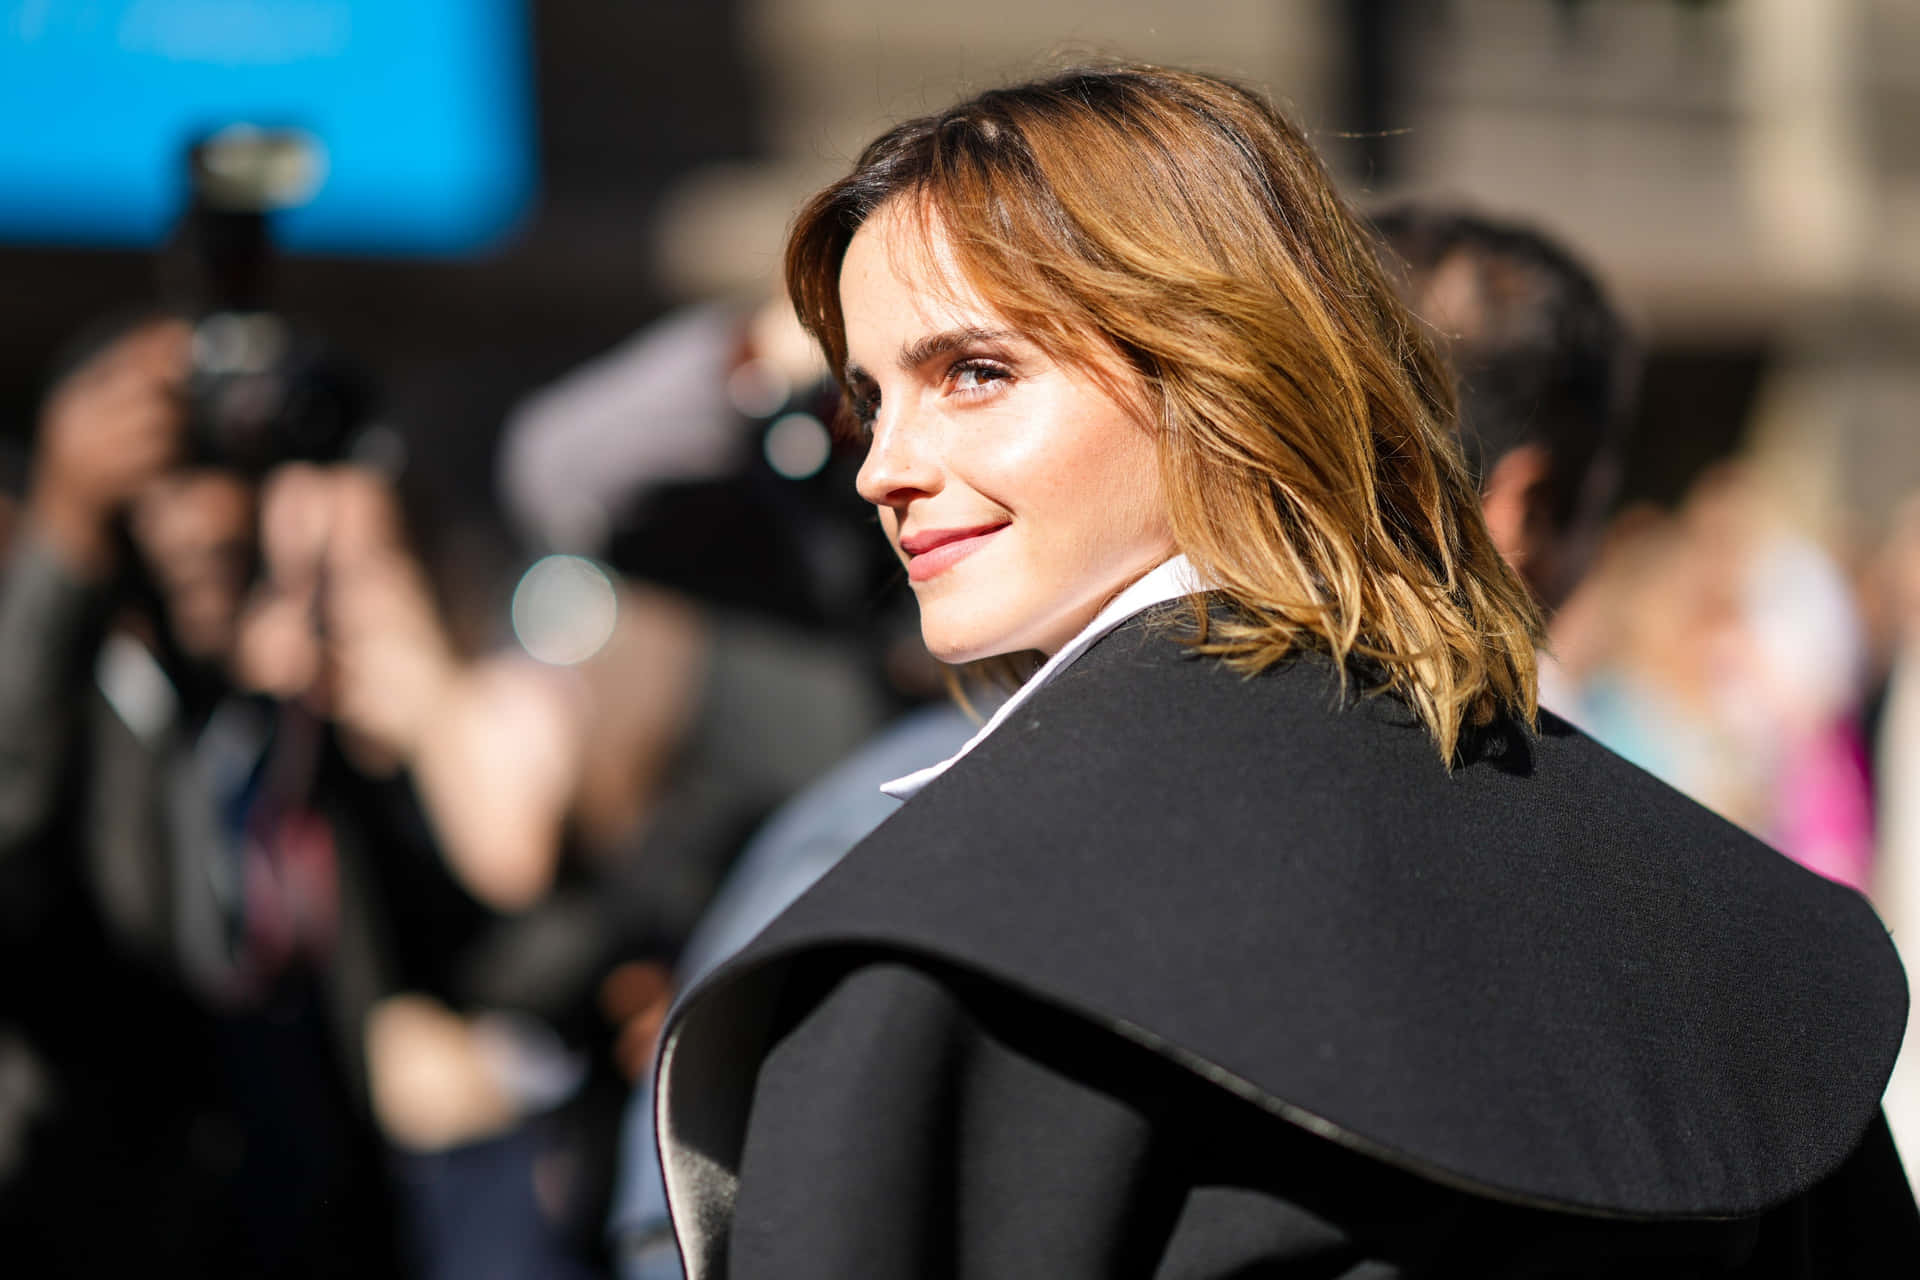 Emma Watson, Academy Award-nominated actress and UN Women Goodwill Ambassador